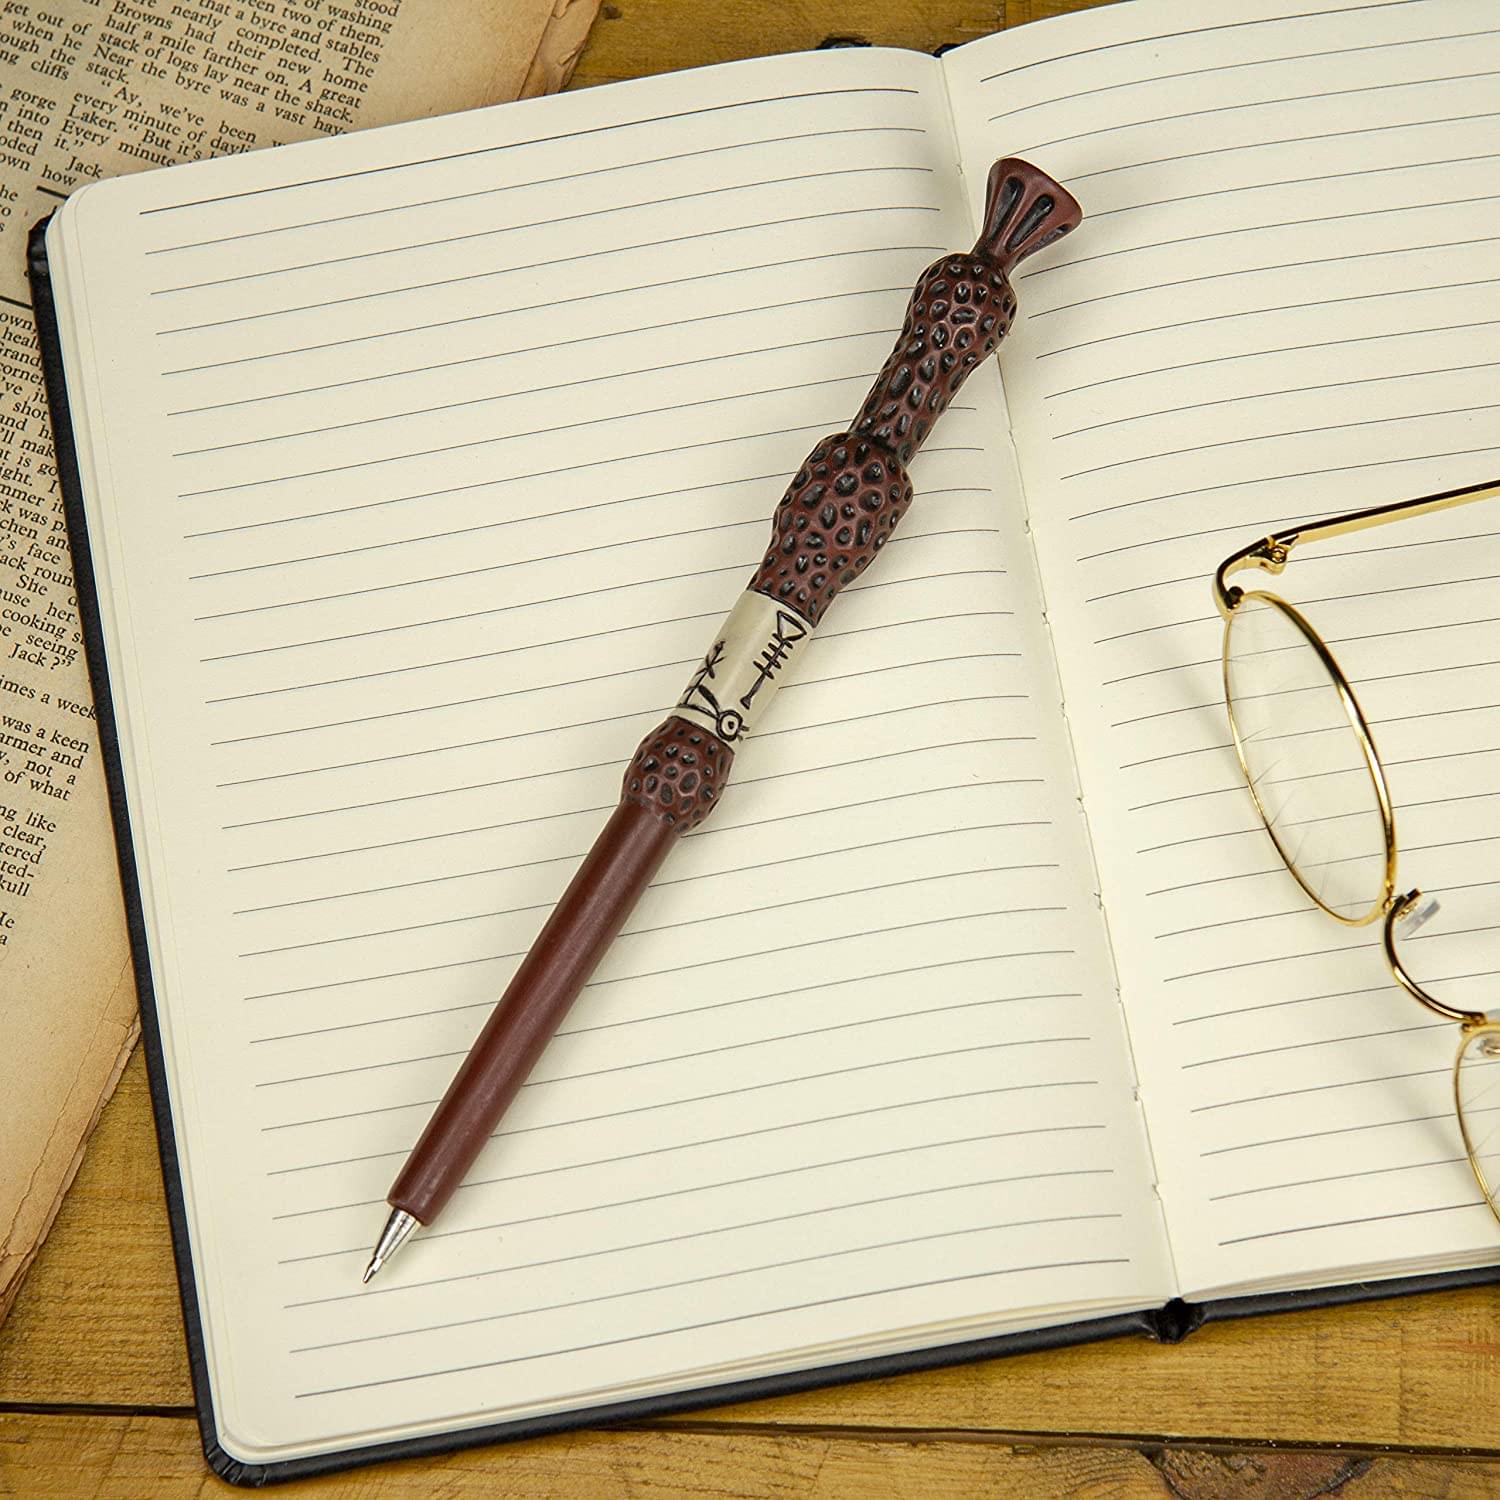 Harry Potter Wand Pen | Dumbledore's Wand | Black Ink